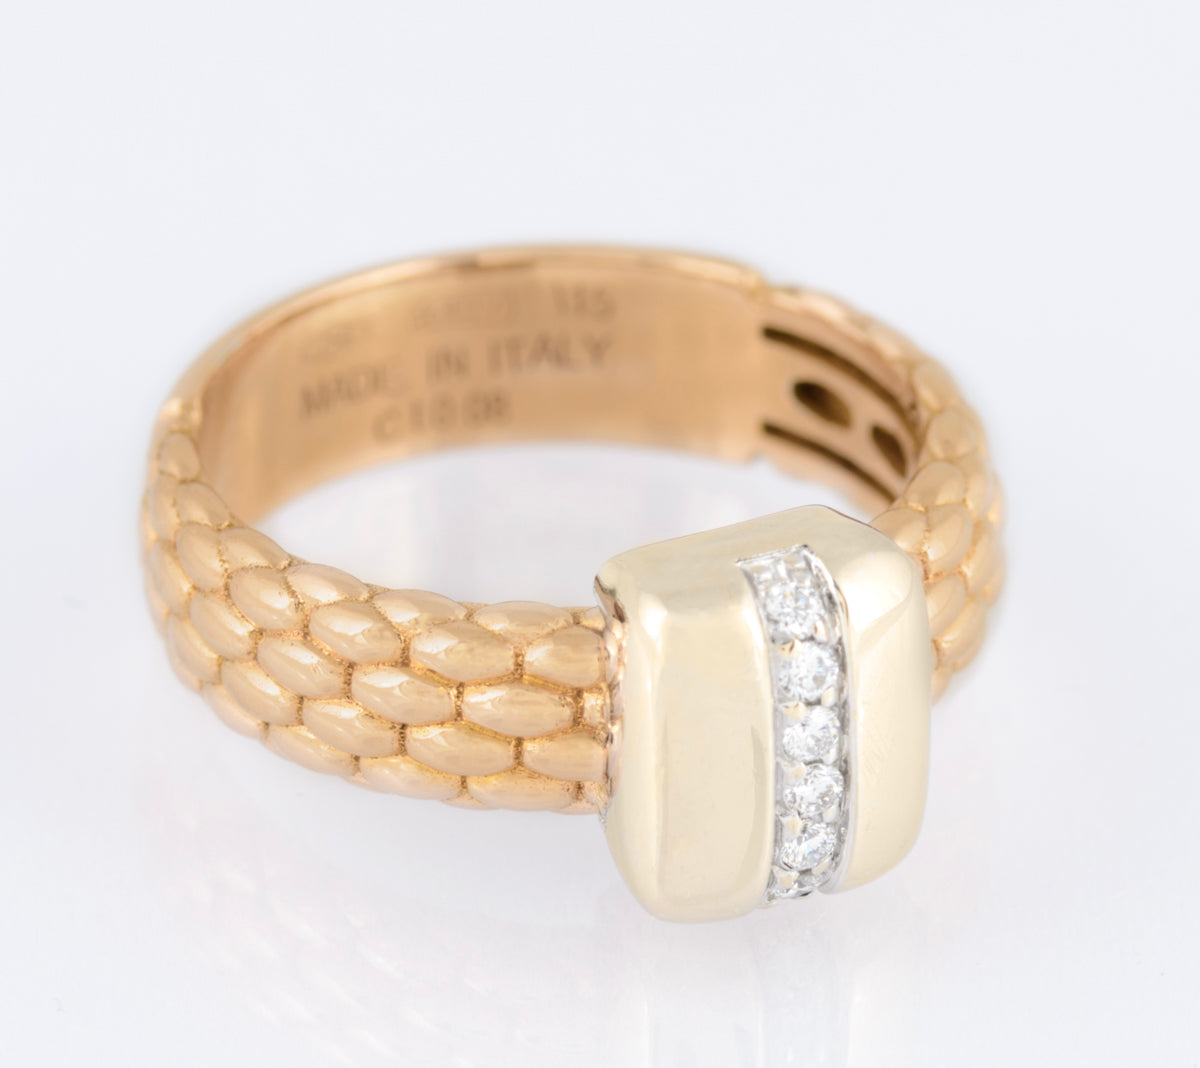 Fope Gioielli Twin 18k Gold & Diamond Italian Designer Ring Boxed UK Size O (A1500)